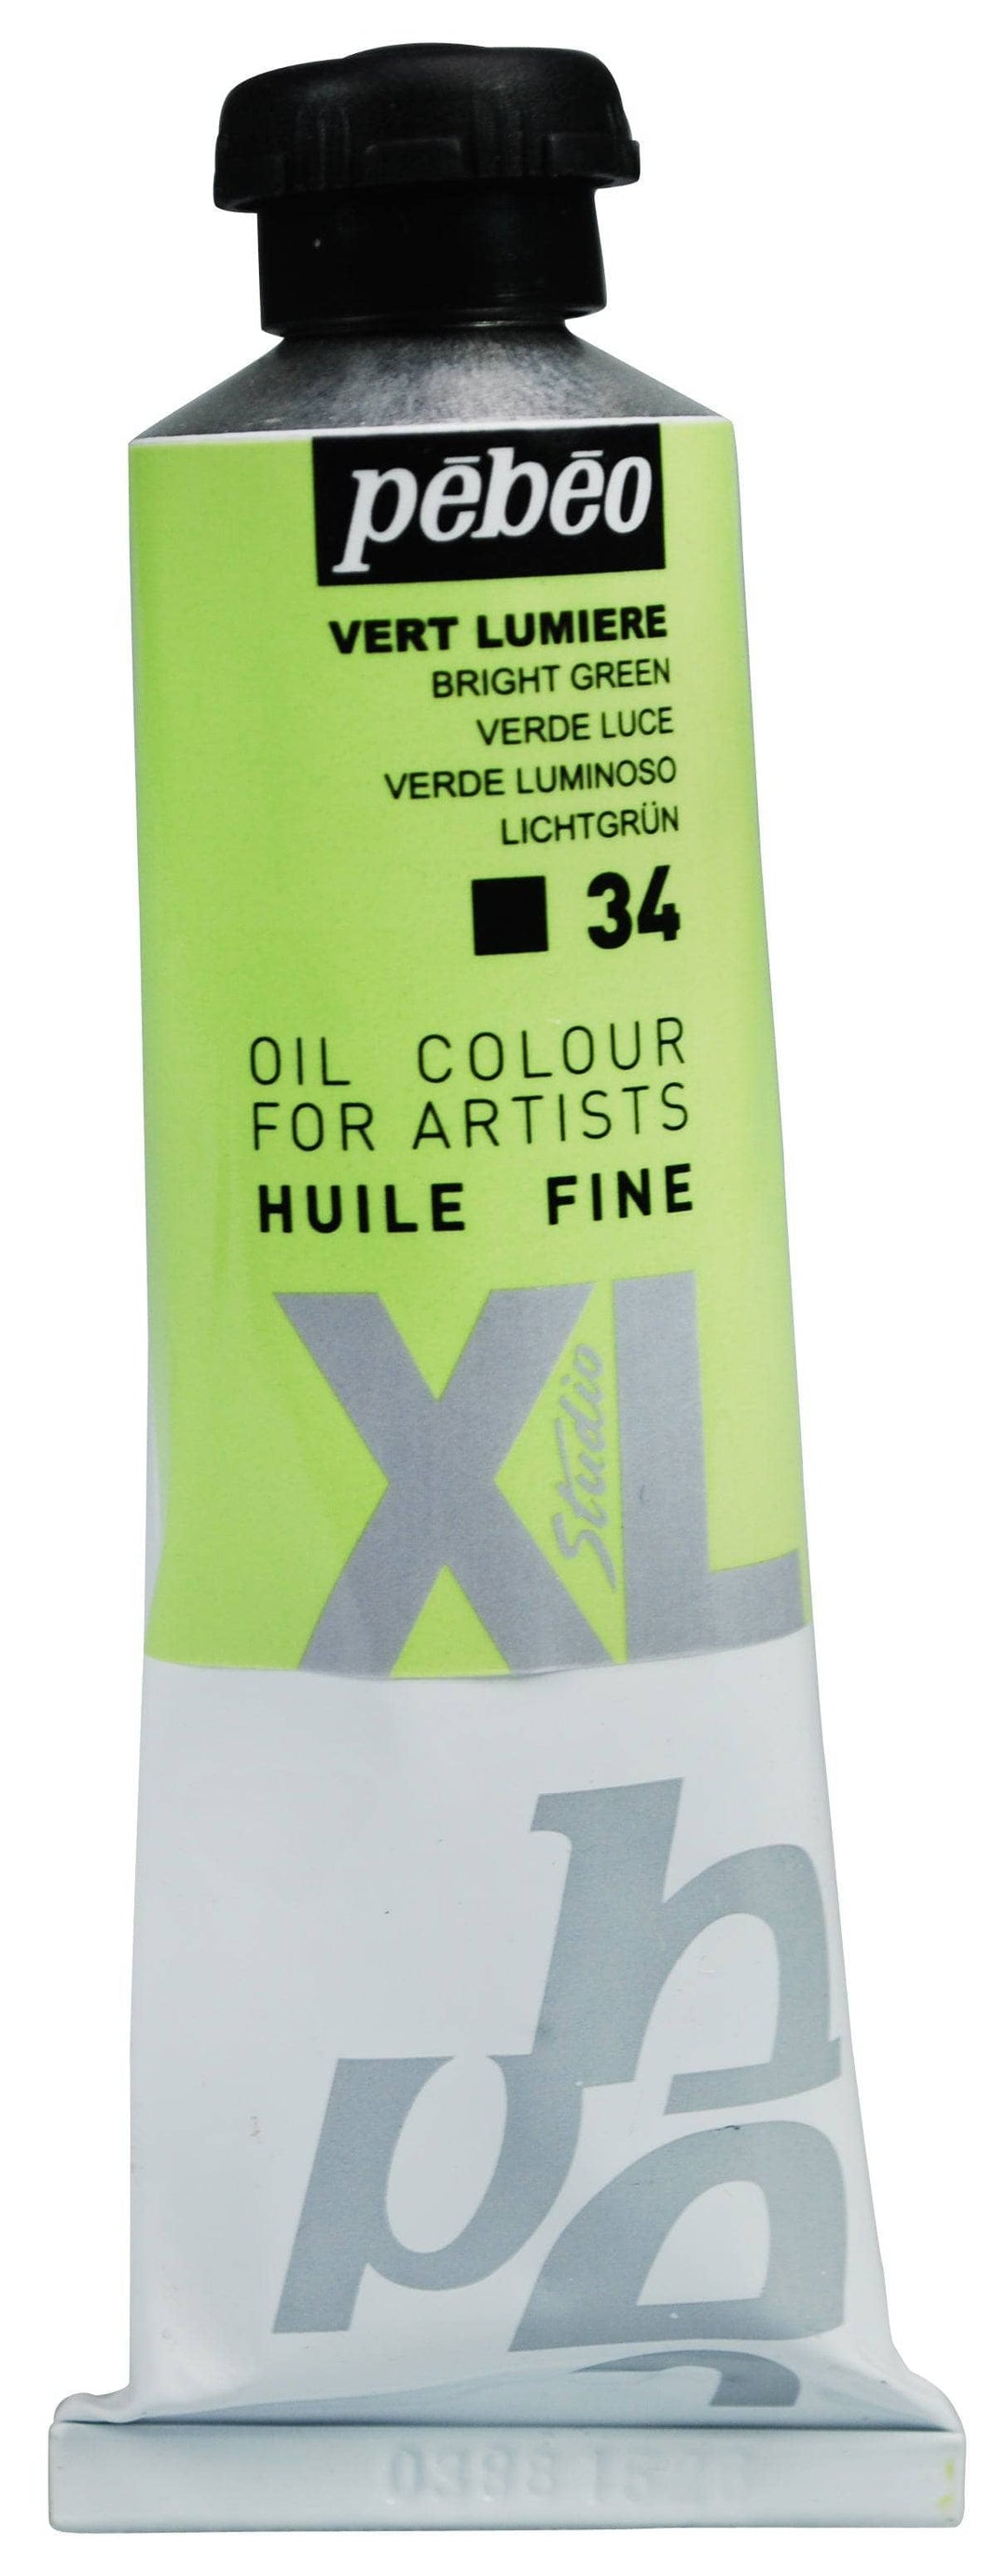 Huile fine Studio XL 37ml - Vert Lumière
PB937034